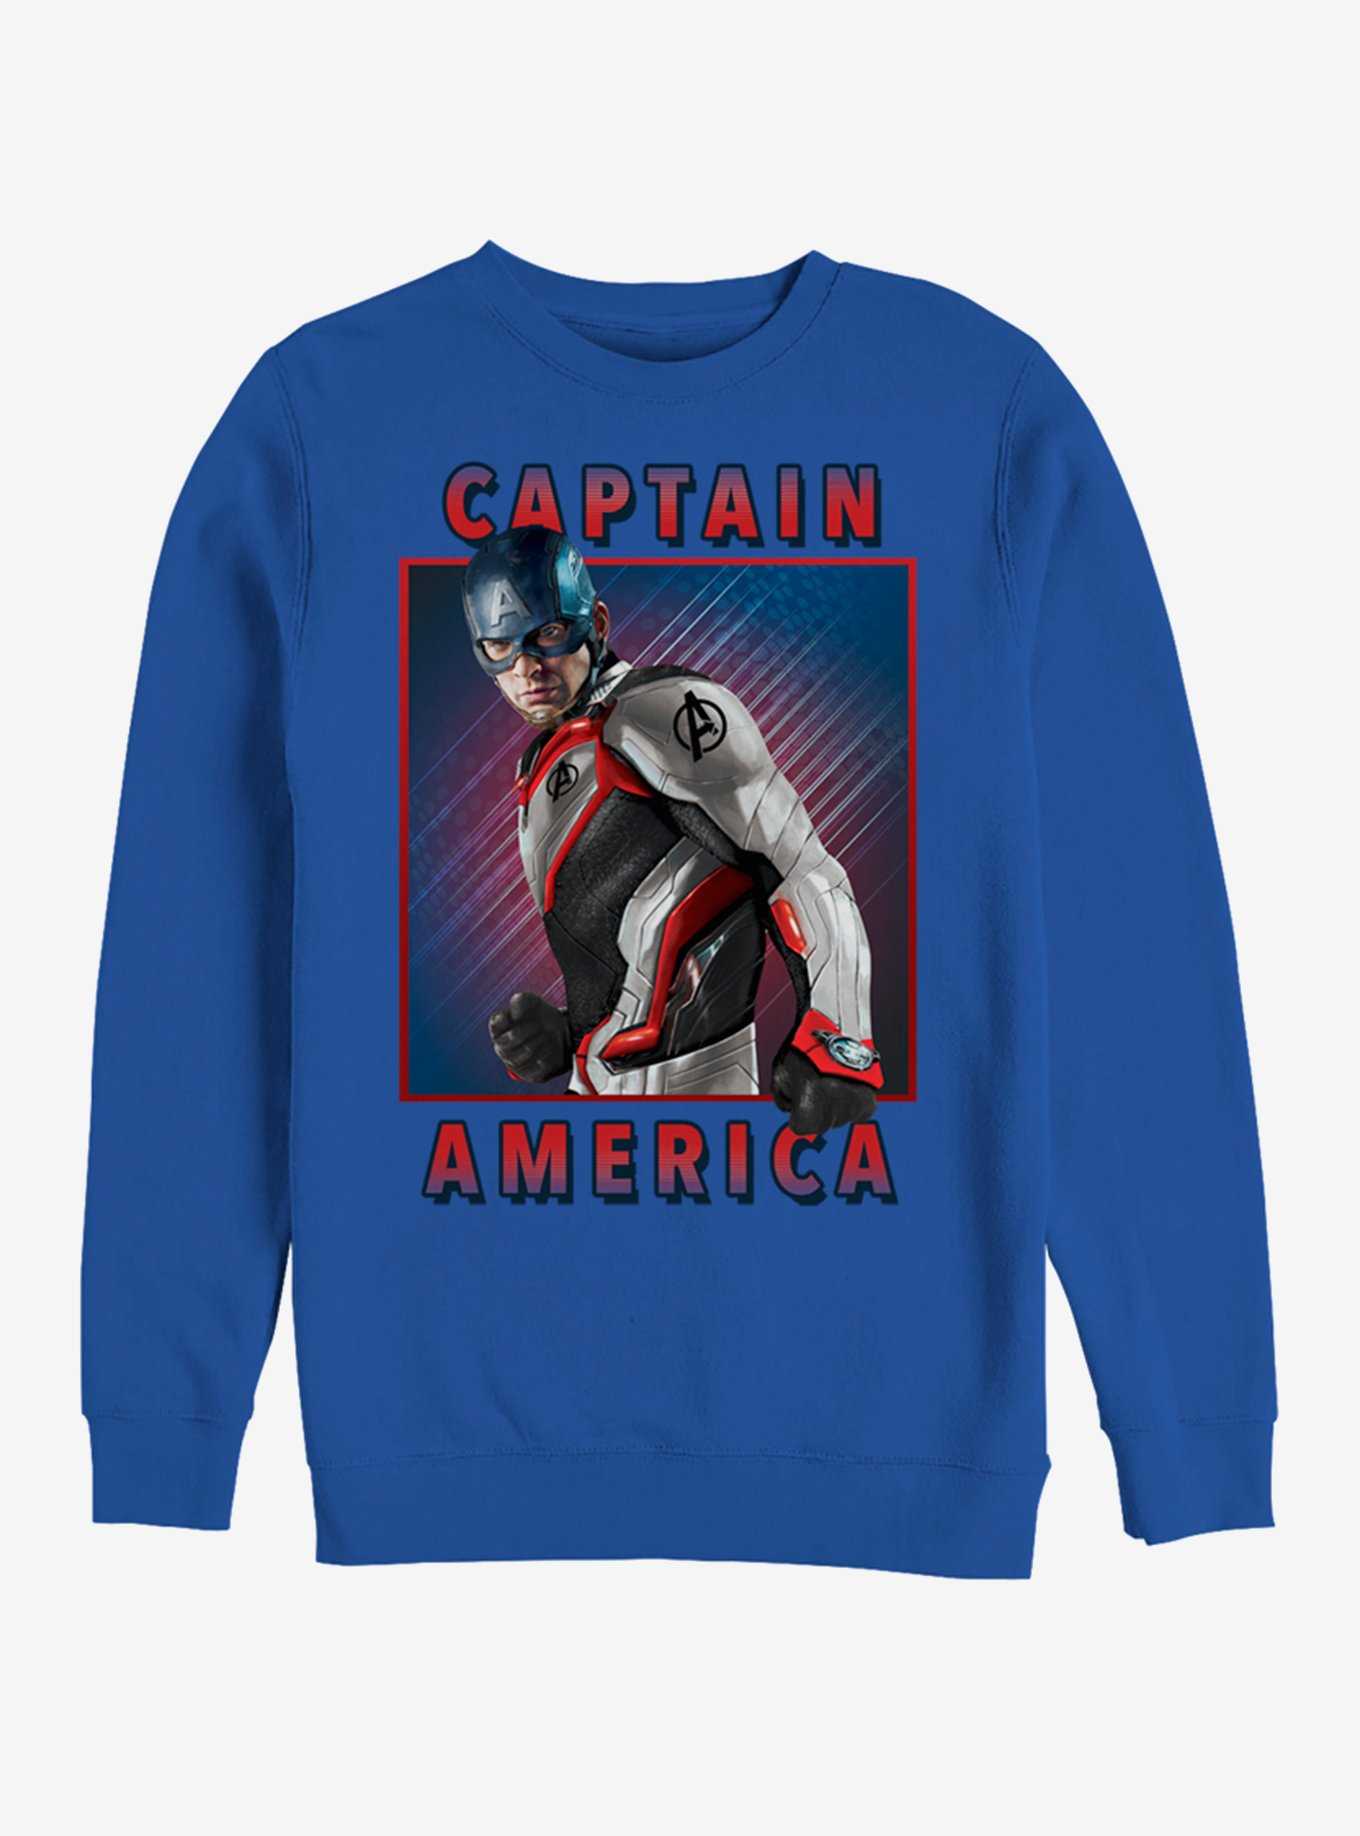 Marvel Avengers: Endgame Captain America Armor Solo Box Royal Blue Sweatshirt, , hi-res